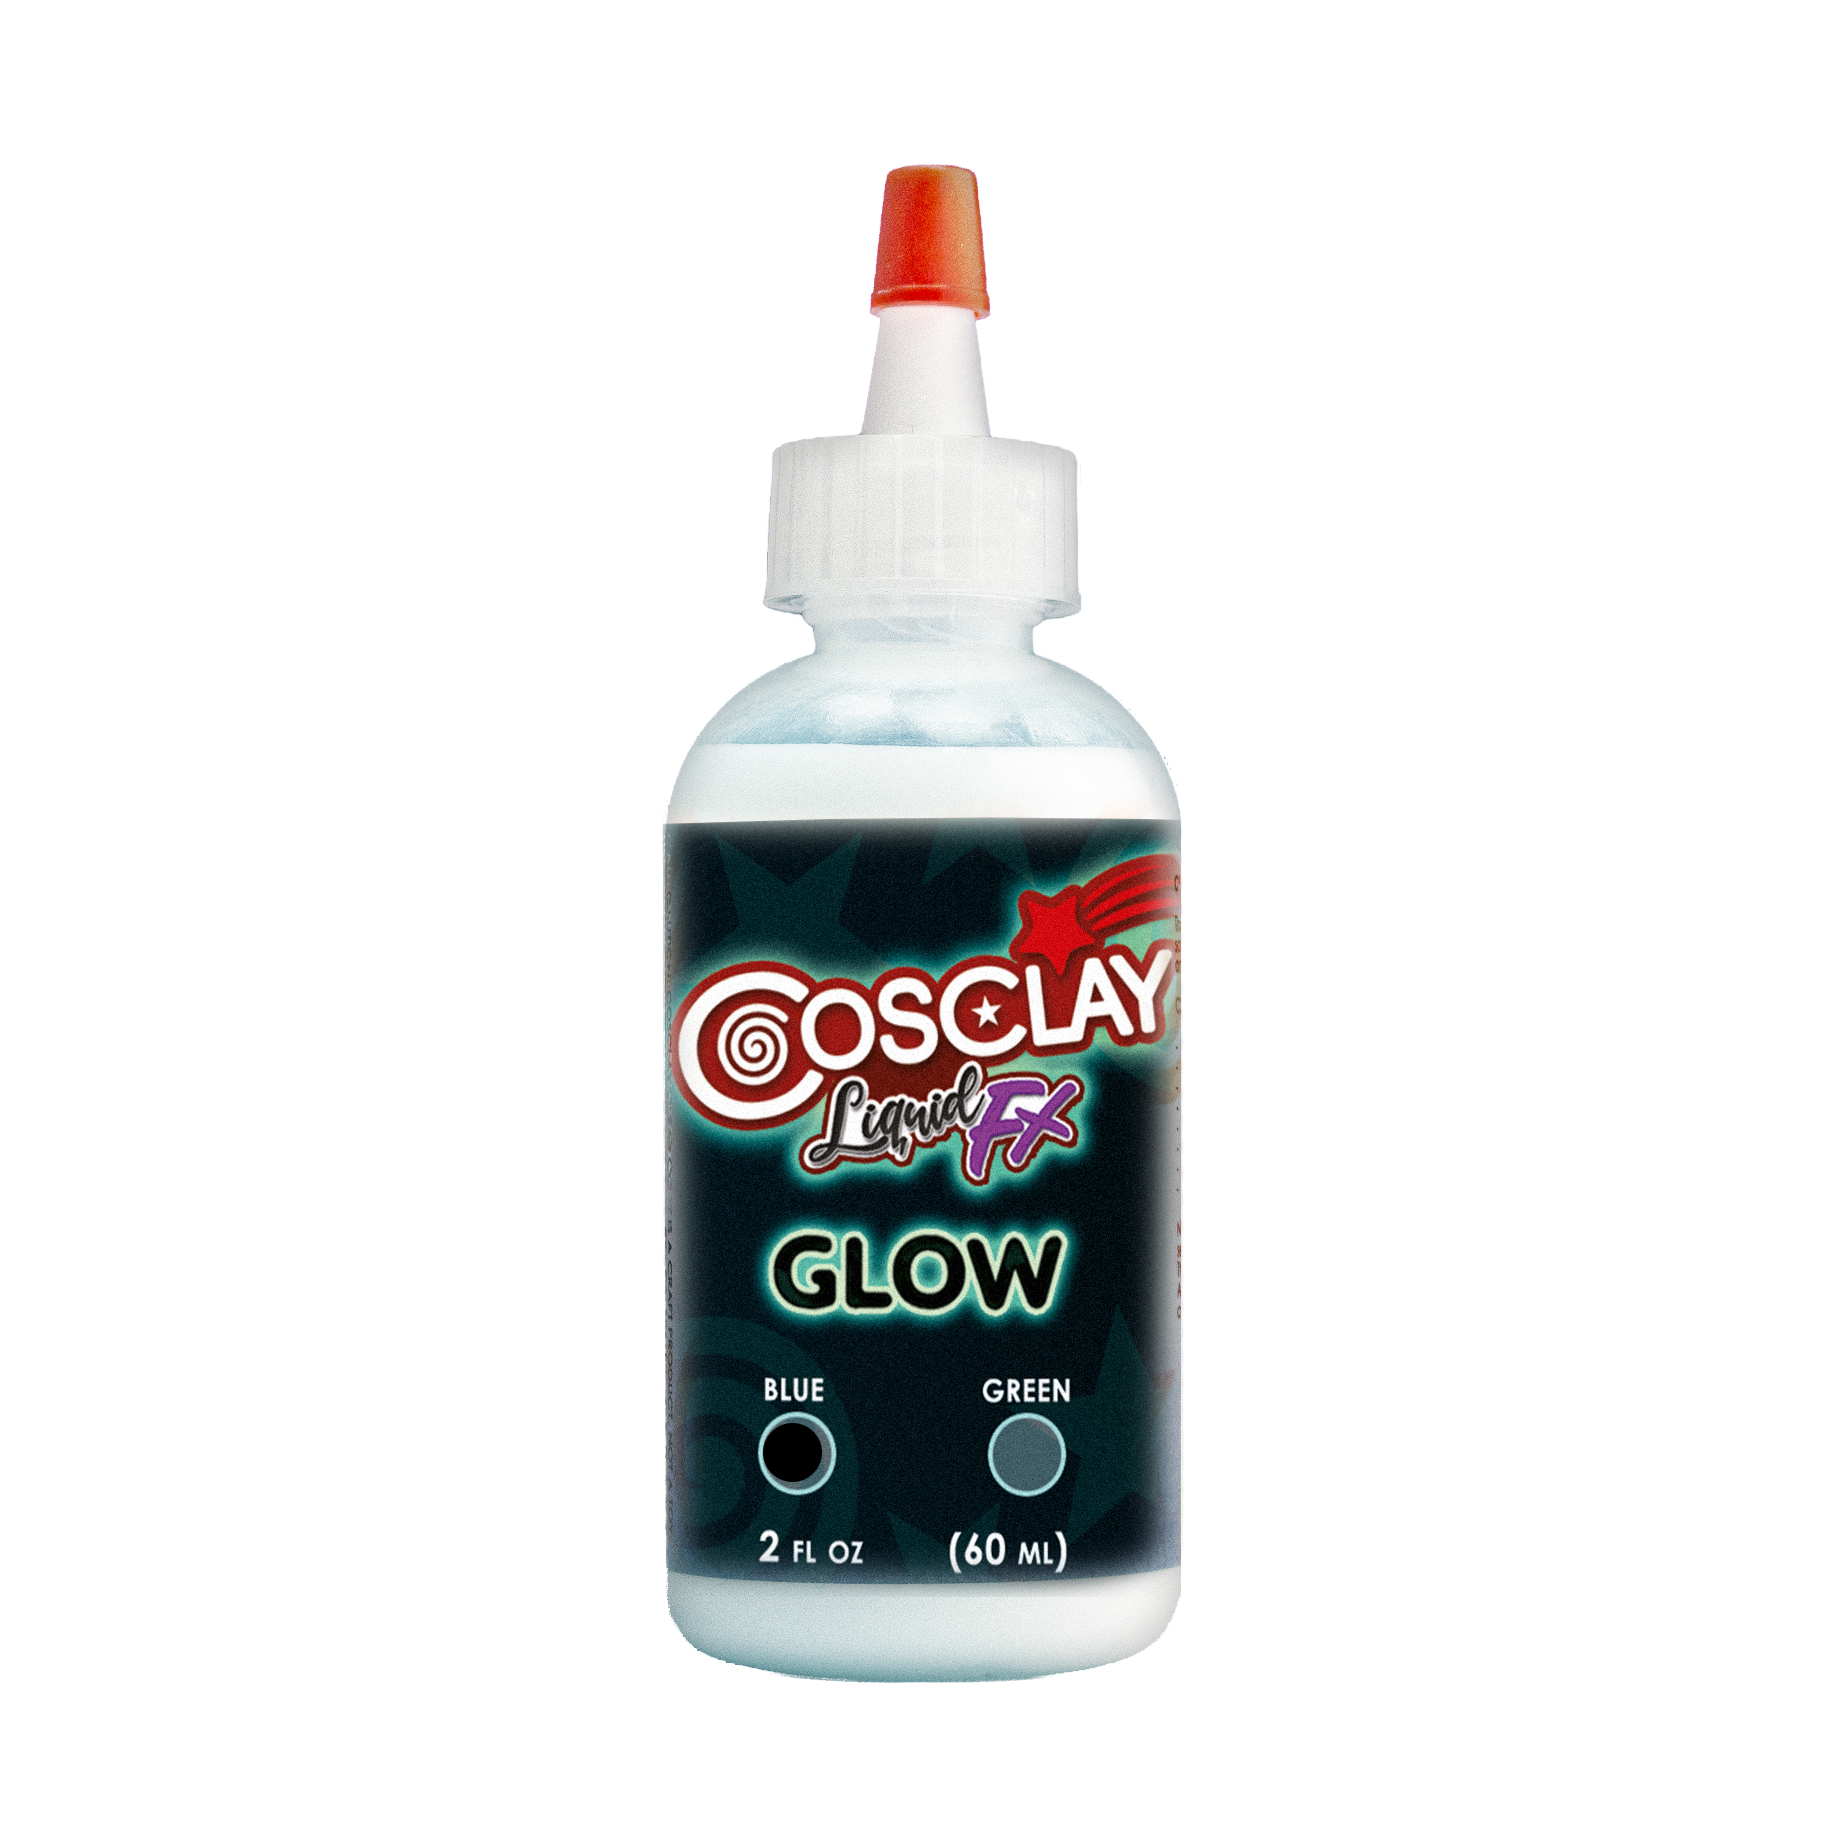 Mevrouw Tether Permanent NEW Cosclay Liquid FX GLOW — Cosclay